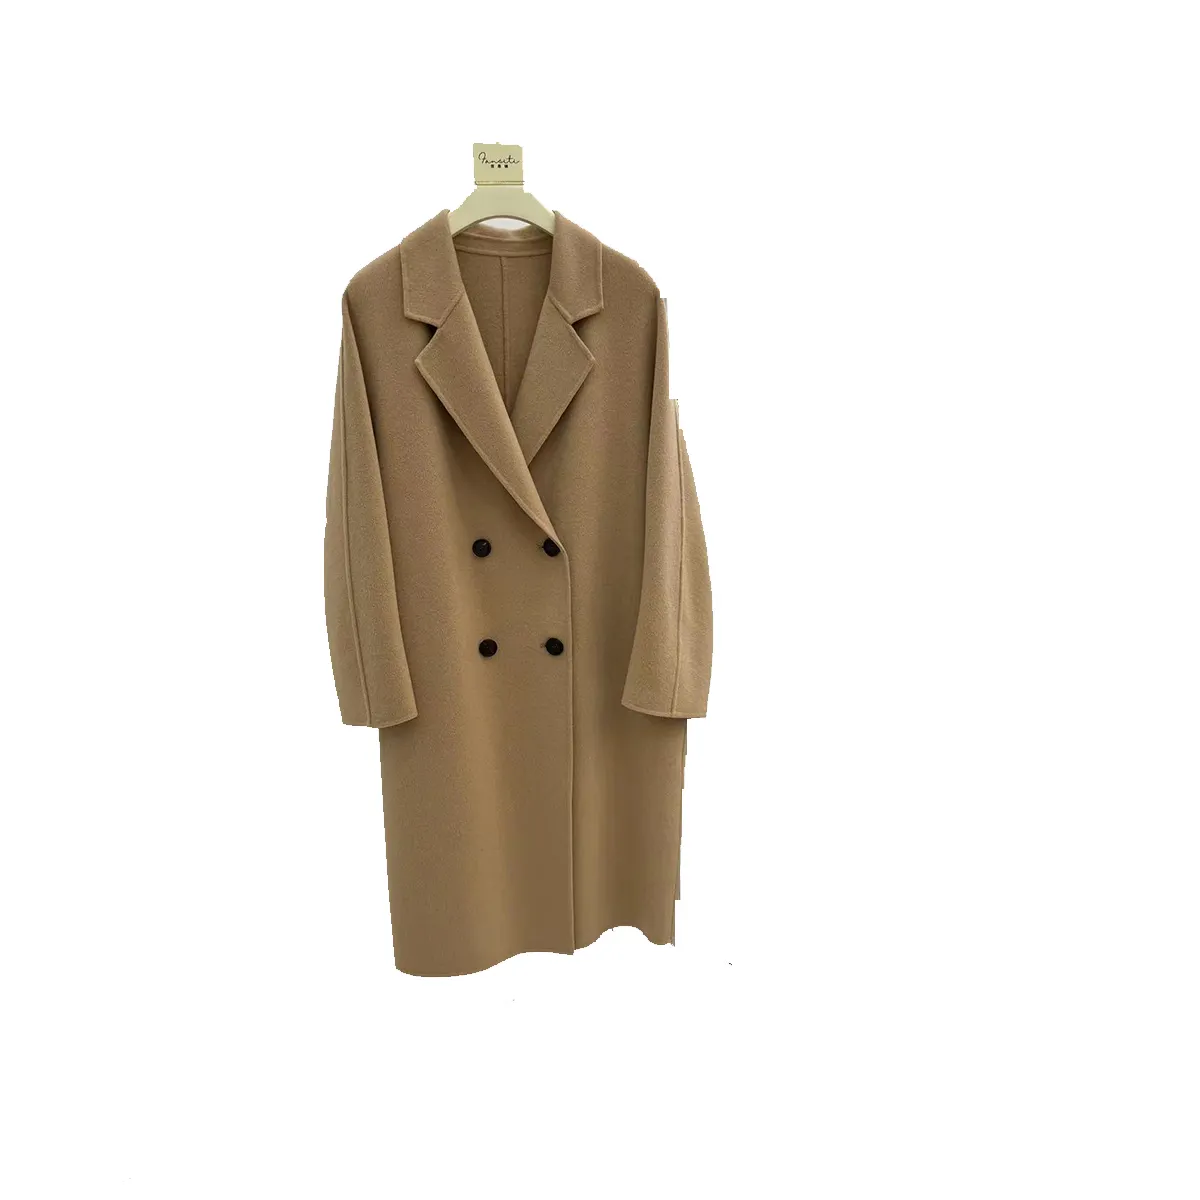 OEM haute couture, autumn and winter women's jackets cashmere wool long-style women's coat coat 100% cashmere21039